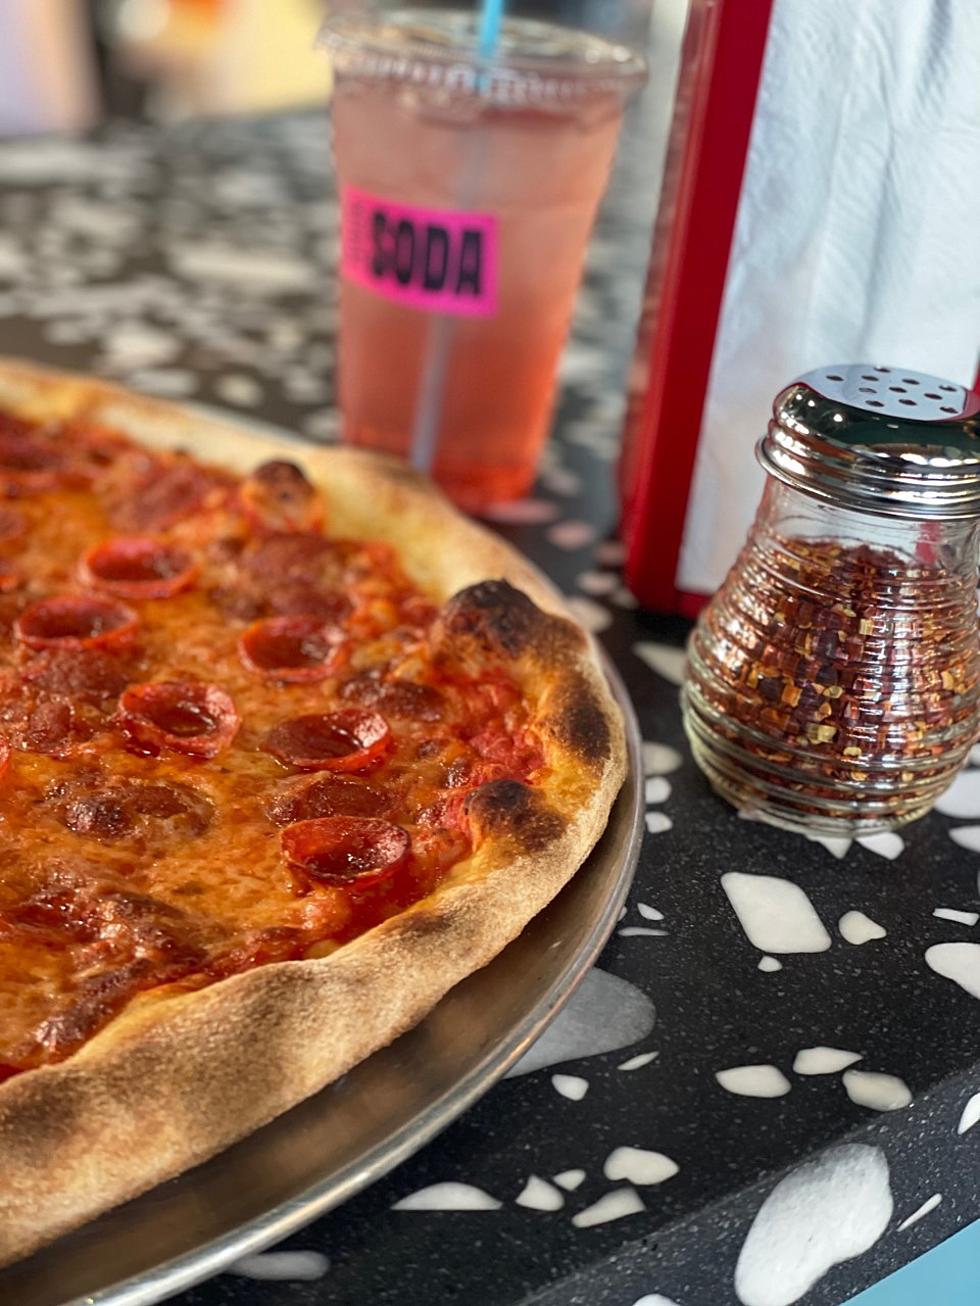 Asbury Park Welcomes Pizzeria With NY-Style Pizza & Homemade Soda